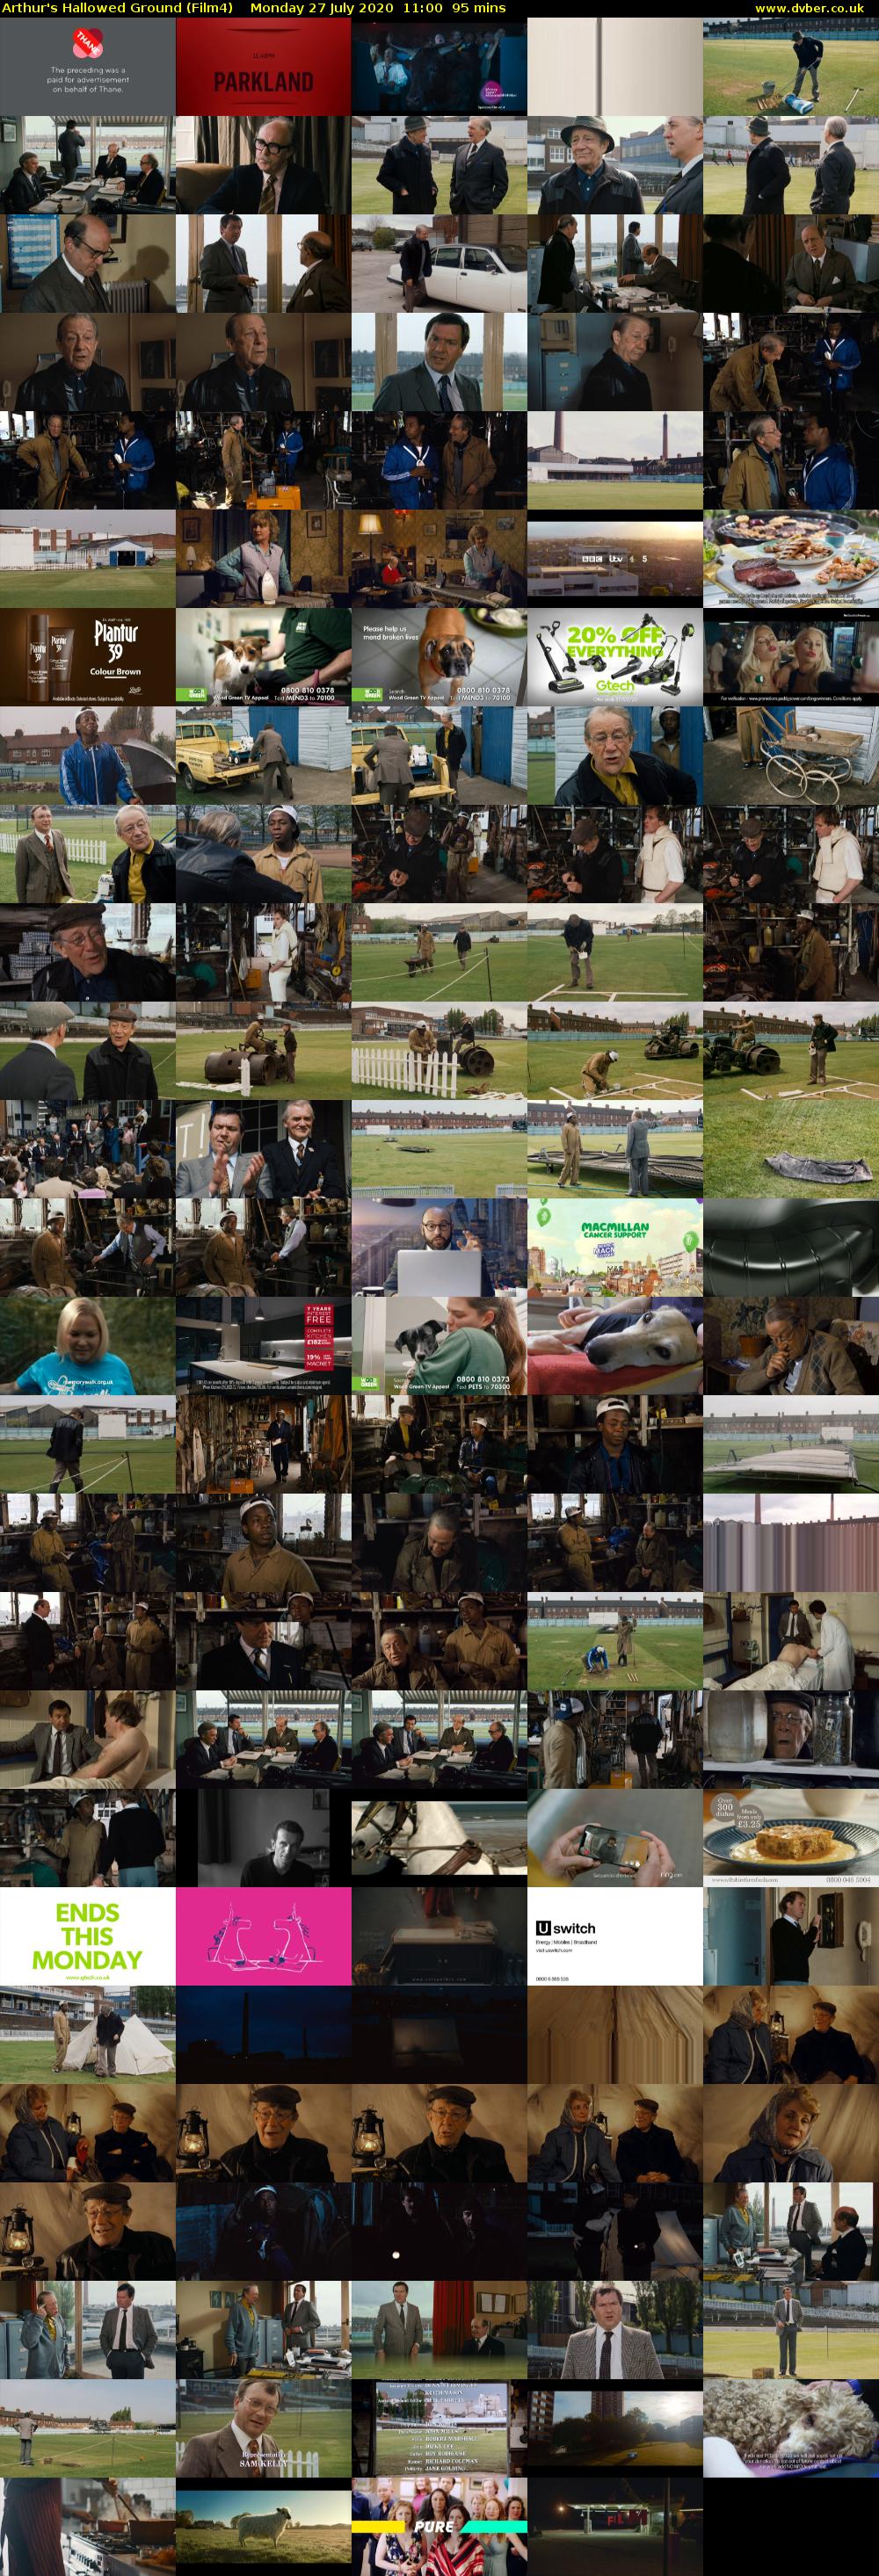 Arthur's Hallowed Ground (Film4) Monday 27 July 2020 11:00 - 12:35